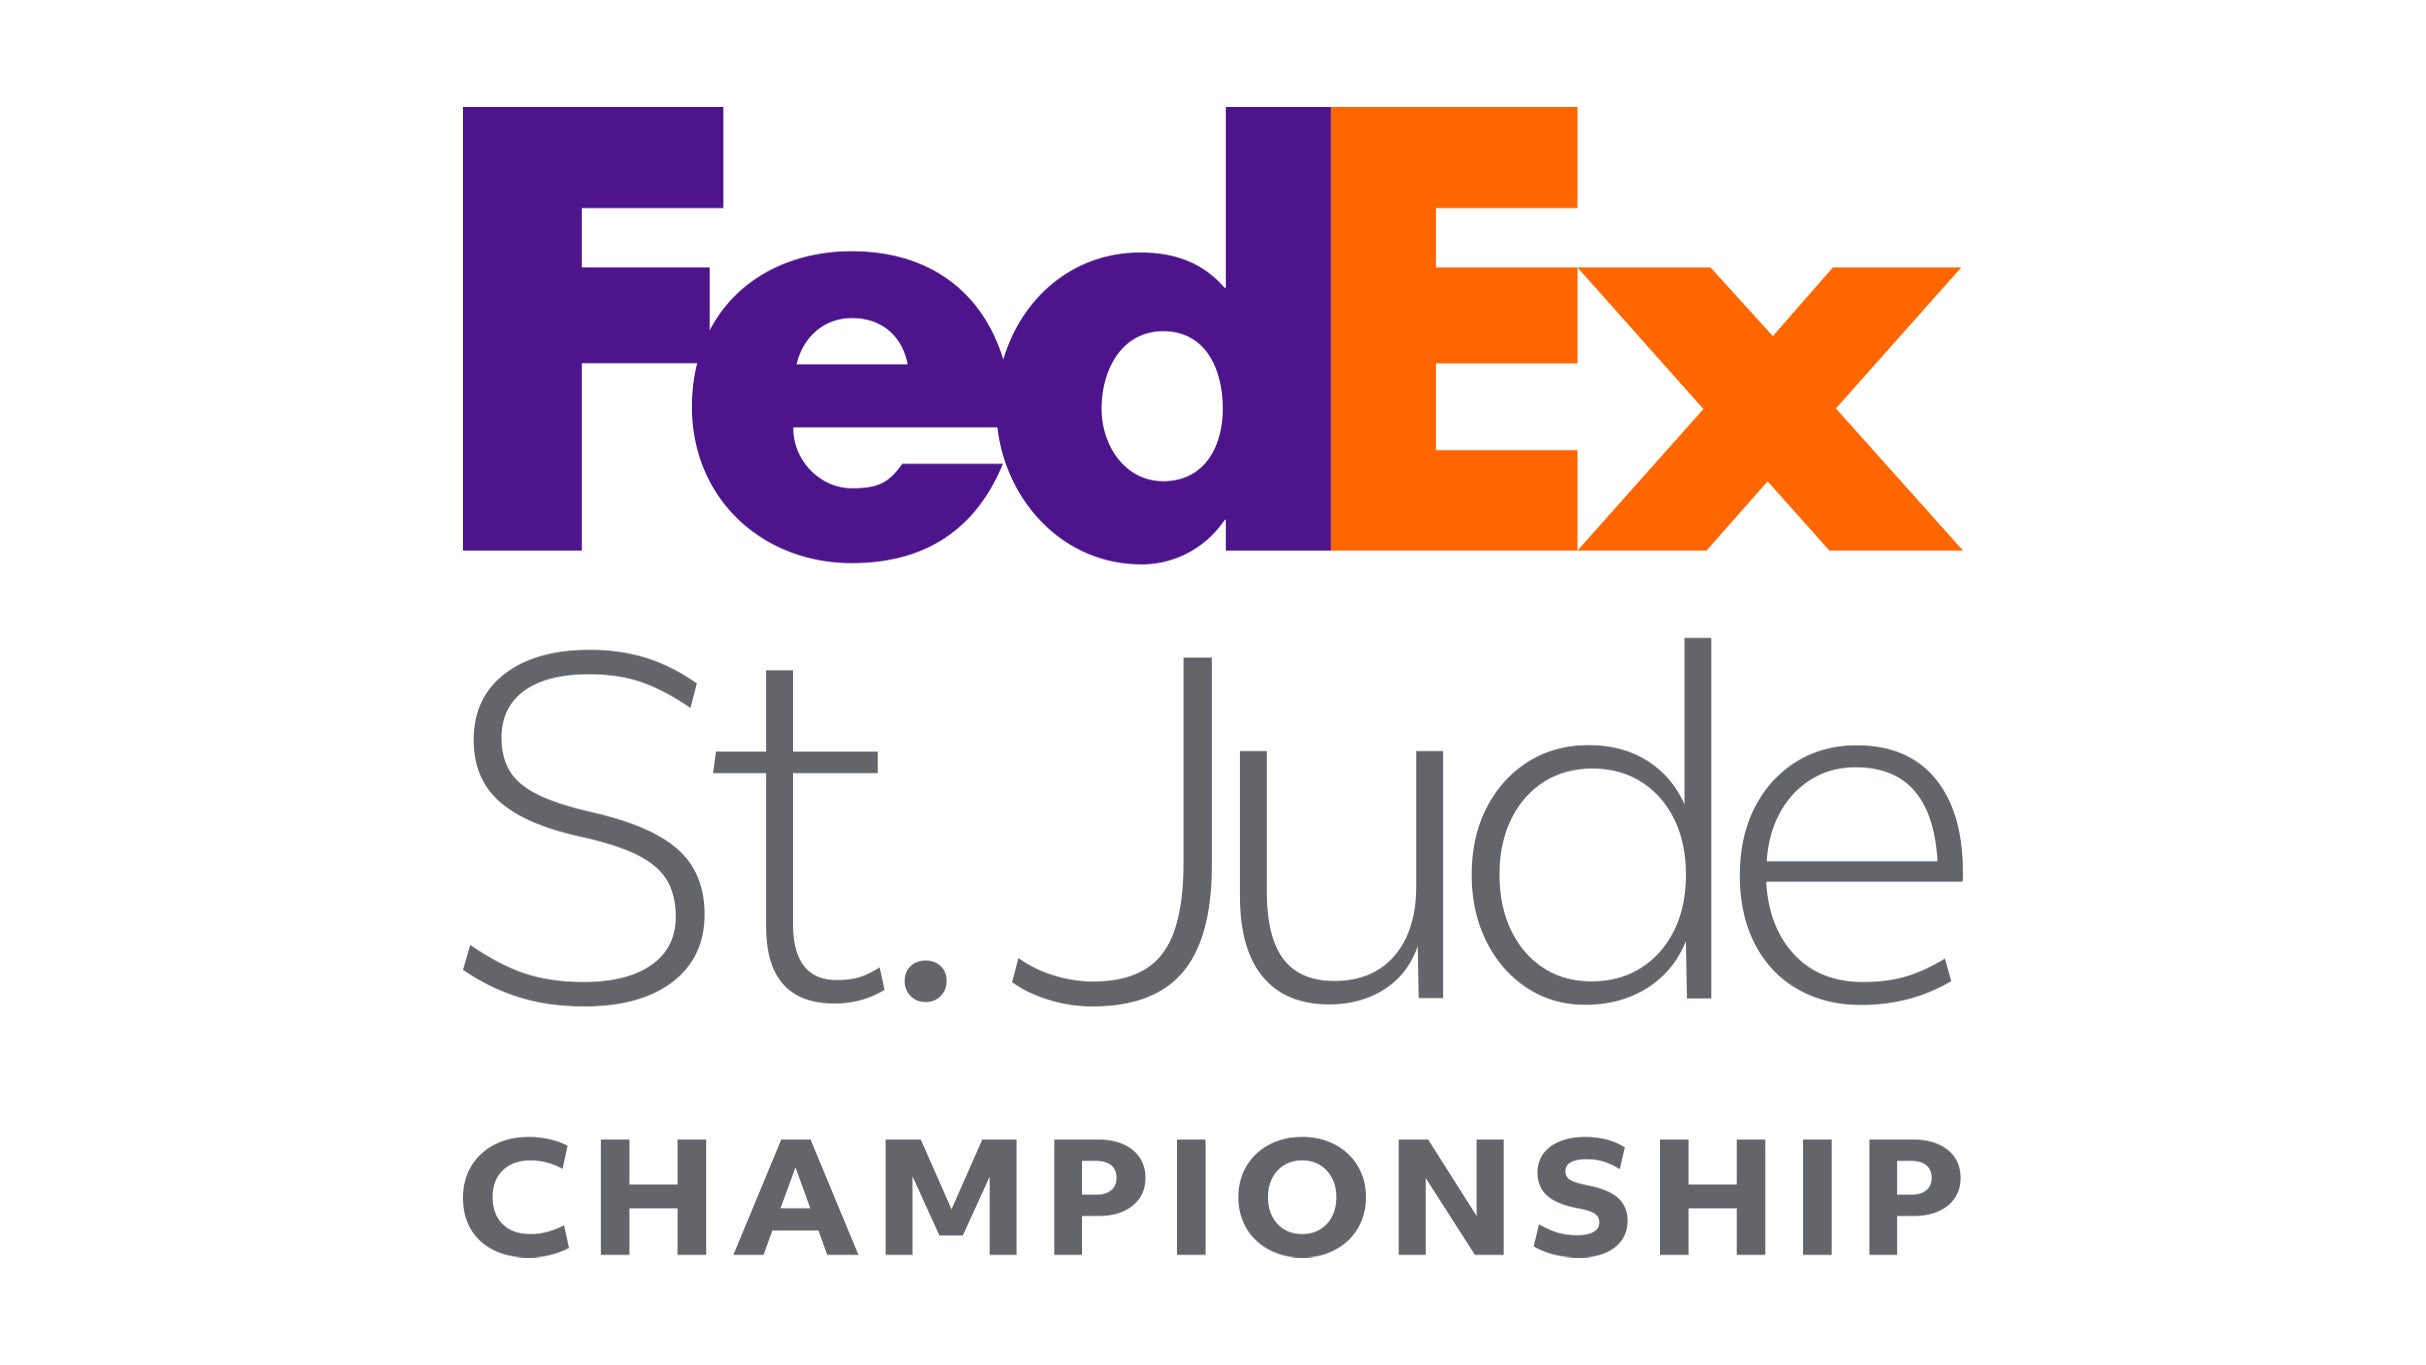 Fedex St. Jude Championship - Wednesday at TPC Southwind